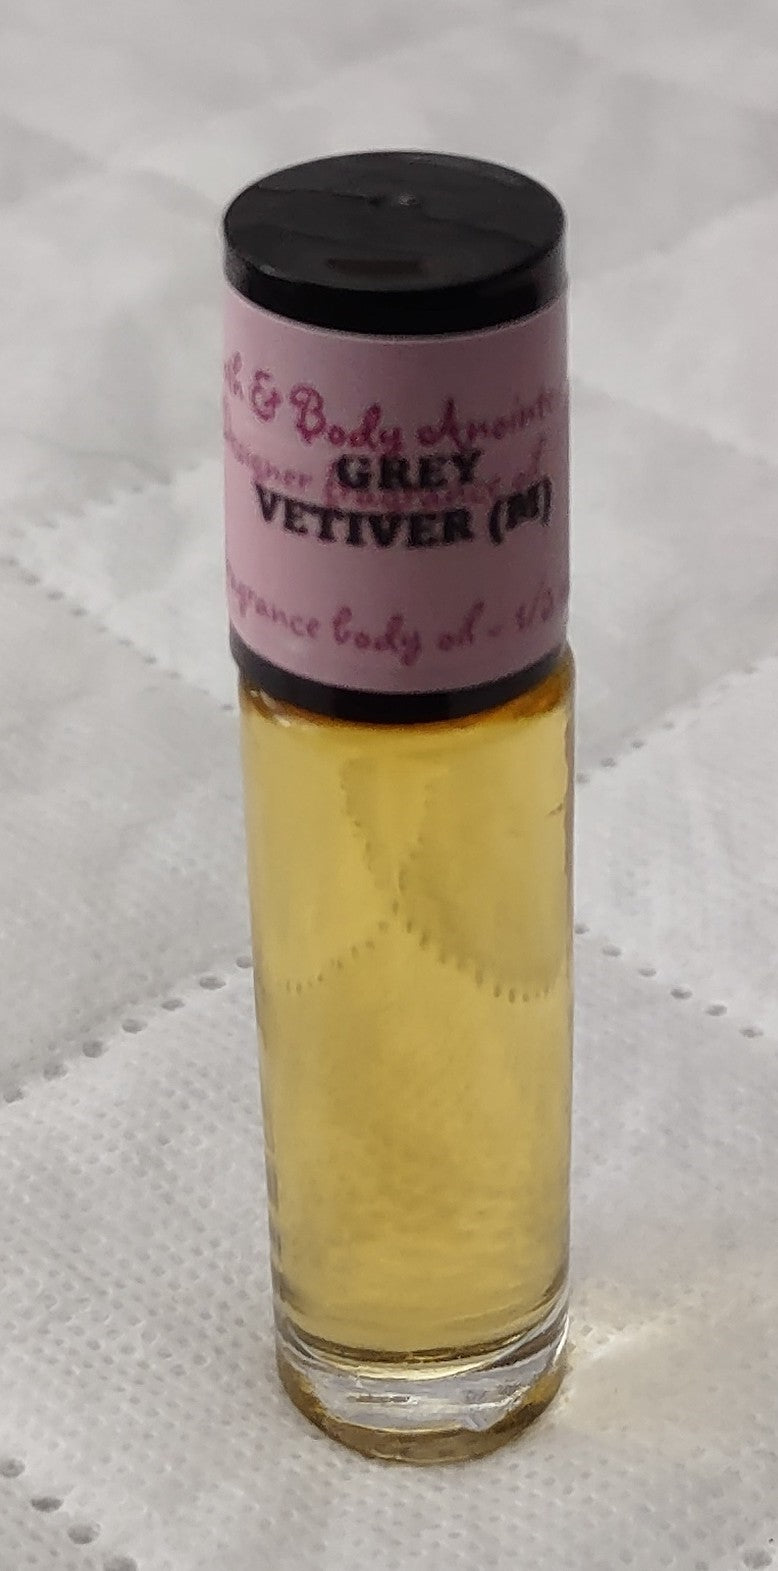 Grey Vetiver for men